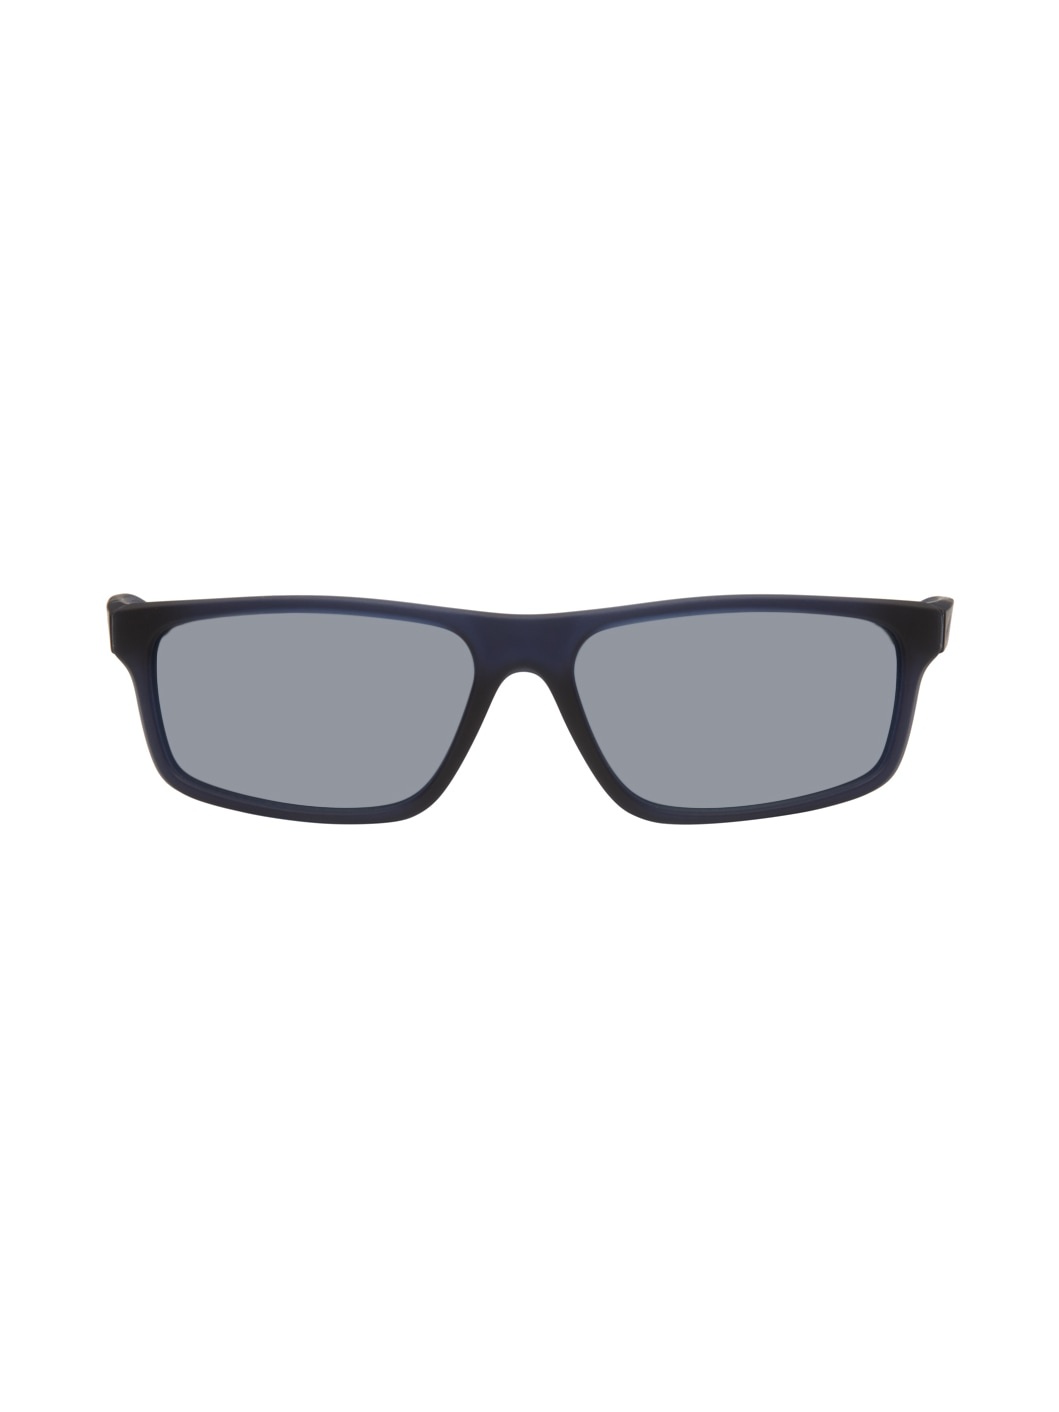 Navy Chronicle Sunglasses - 1